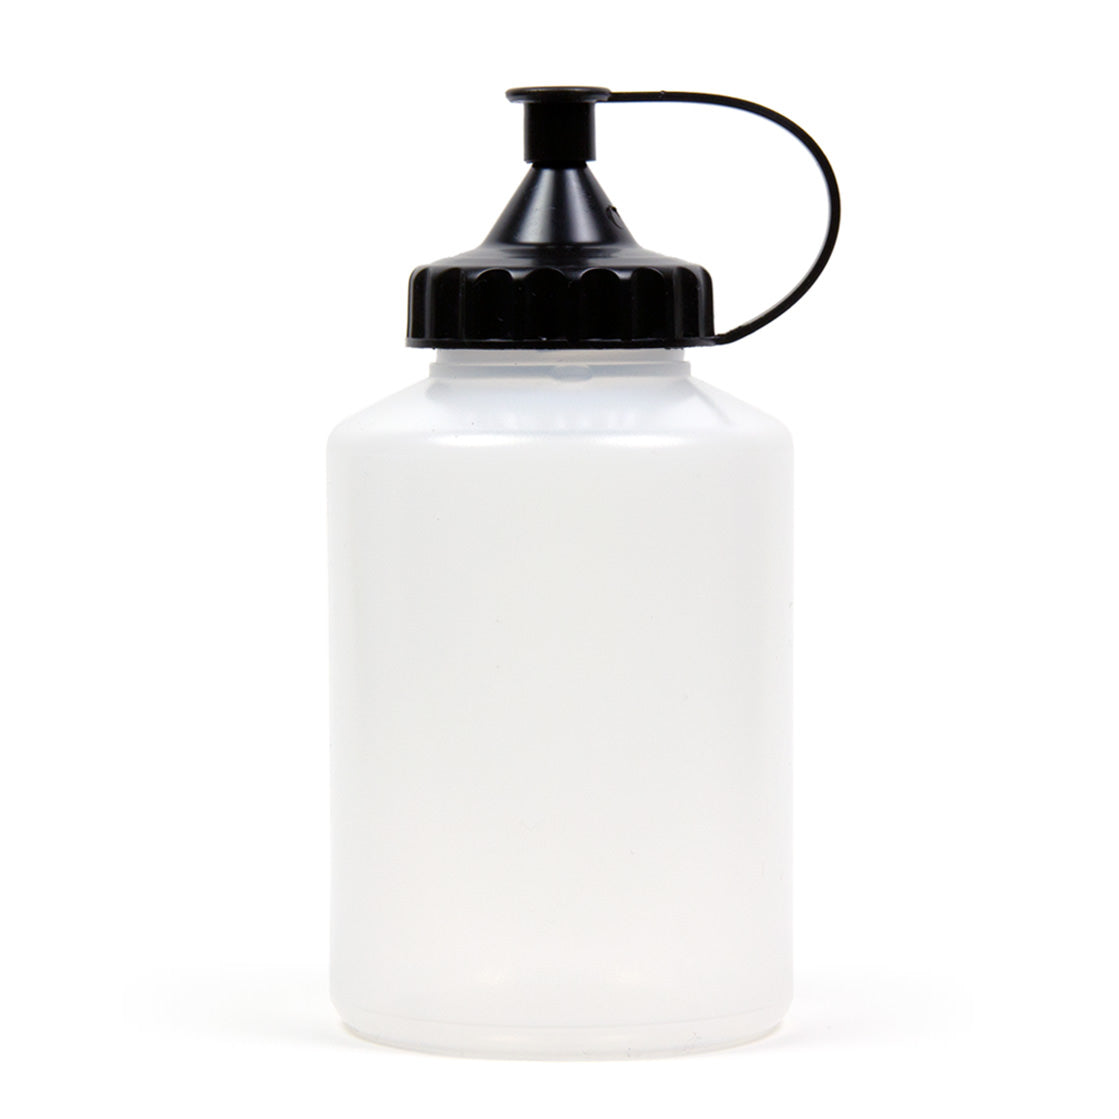 SCHOLL Concepts Dispenser Bottle